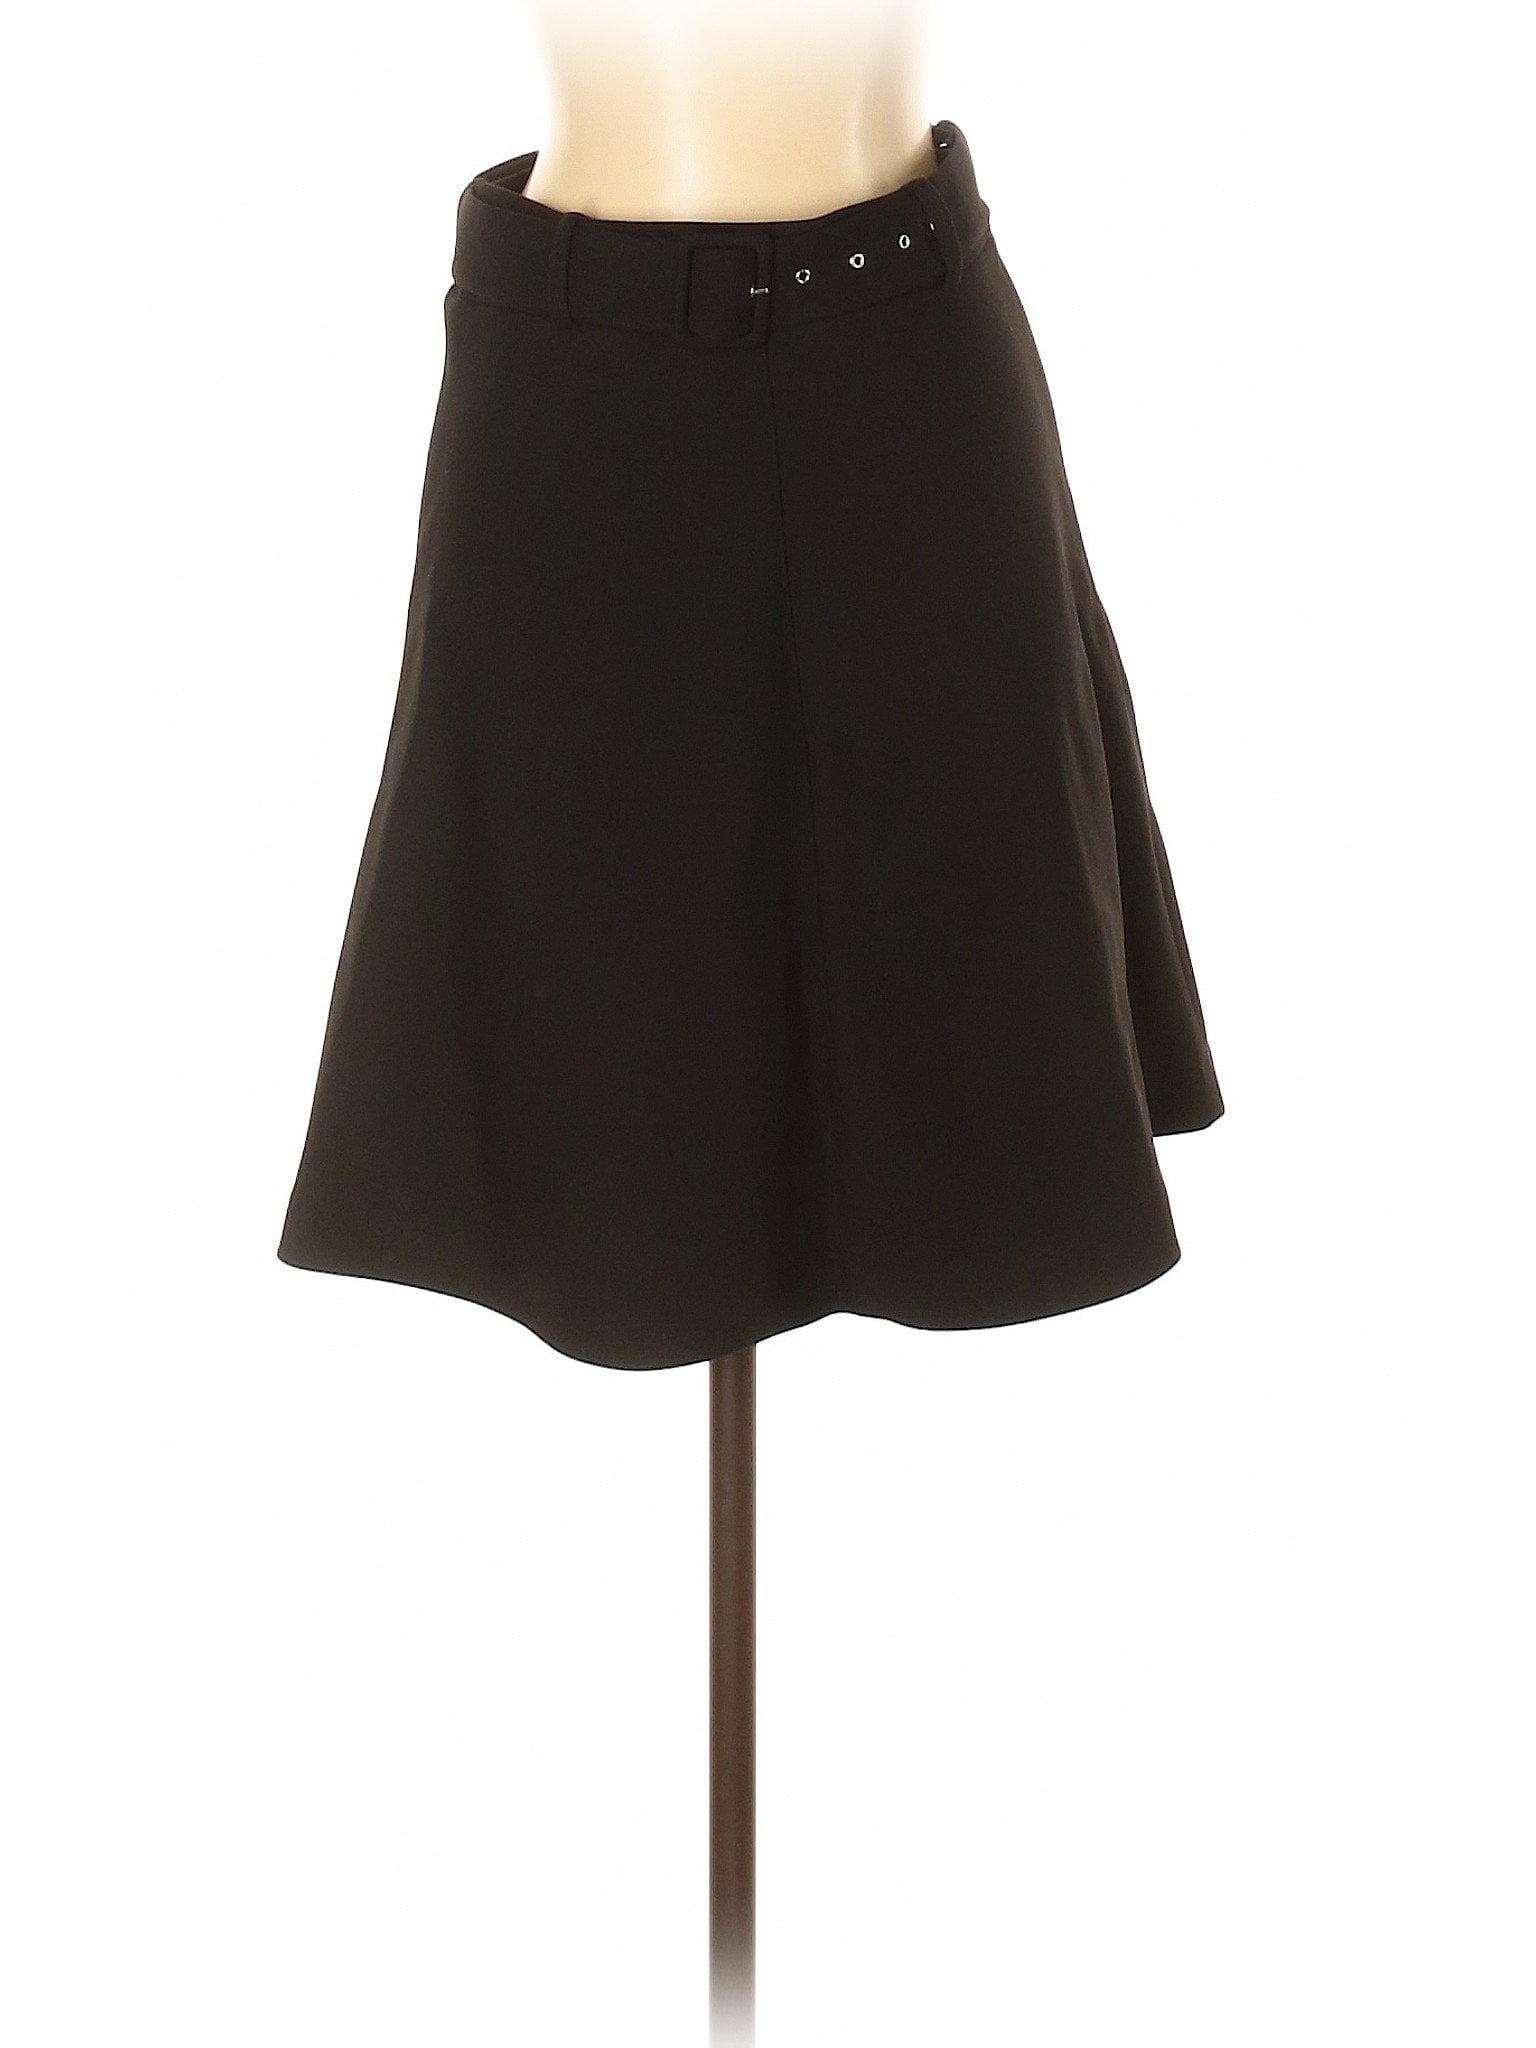 ZARA - Pre-Owned Zara Women's Size S Casual Skirt - Walmart.com ...